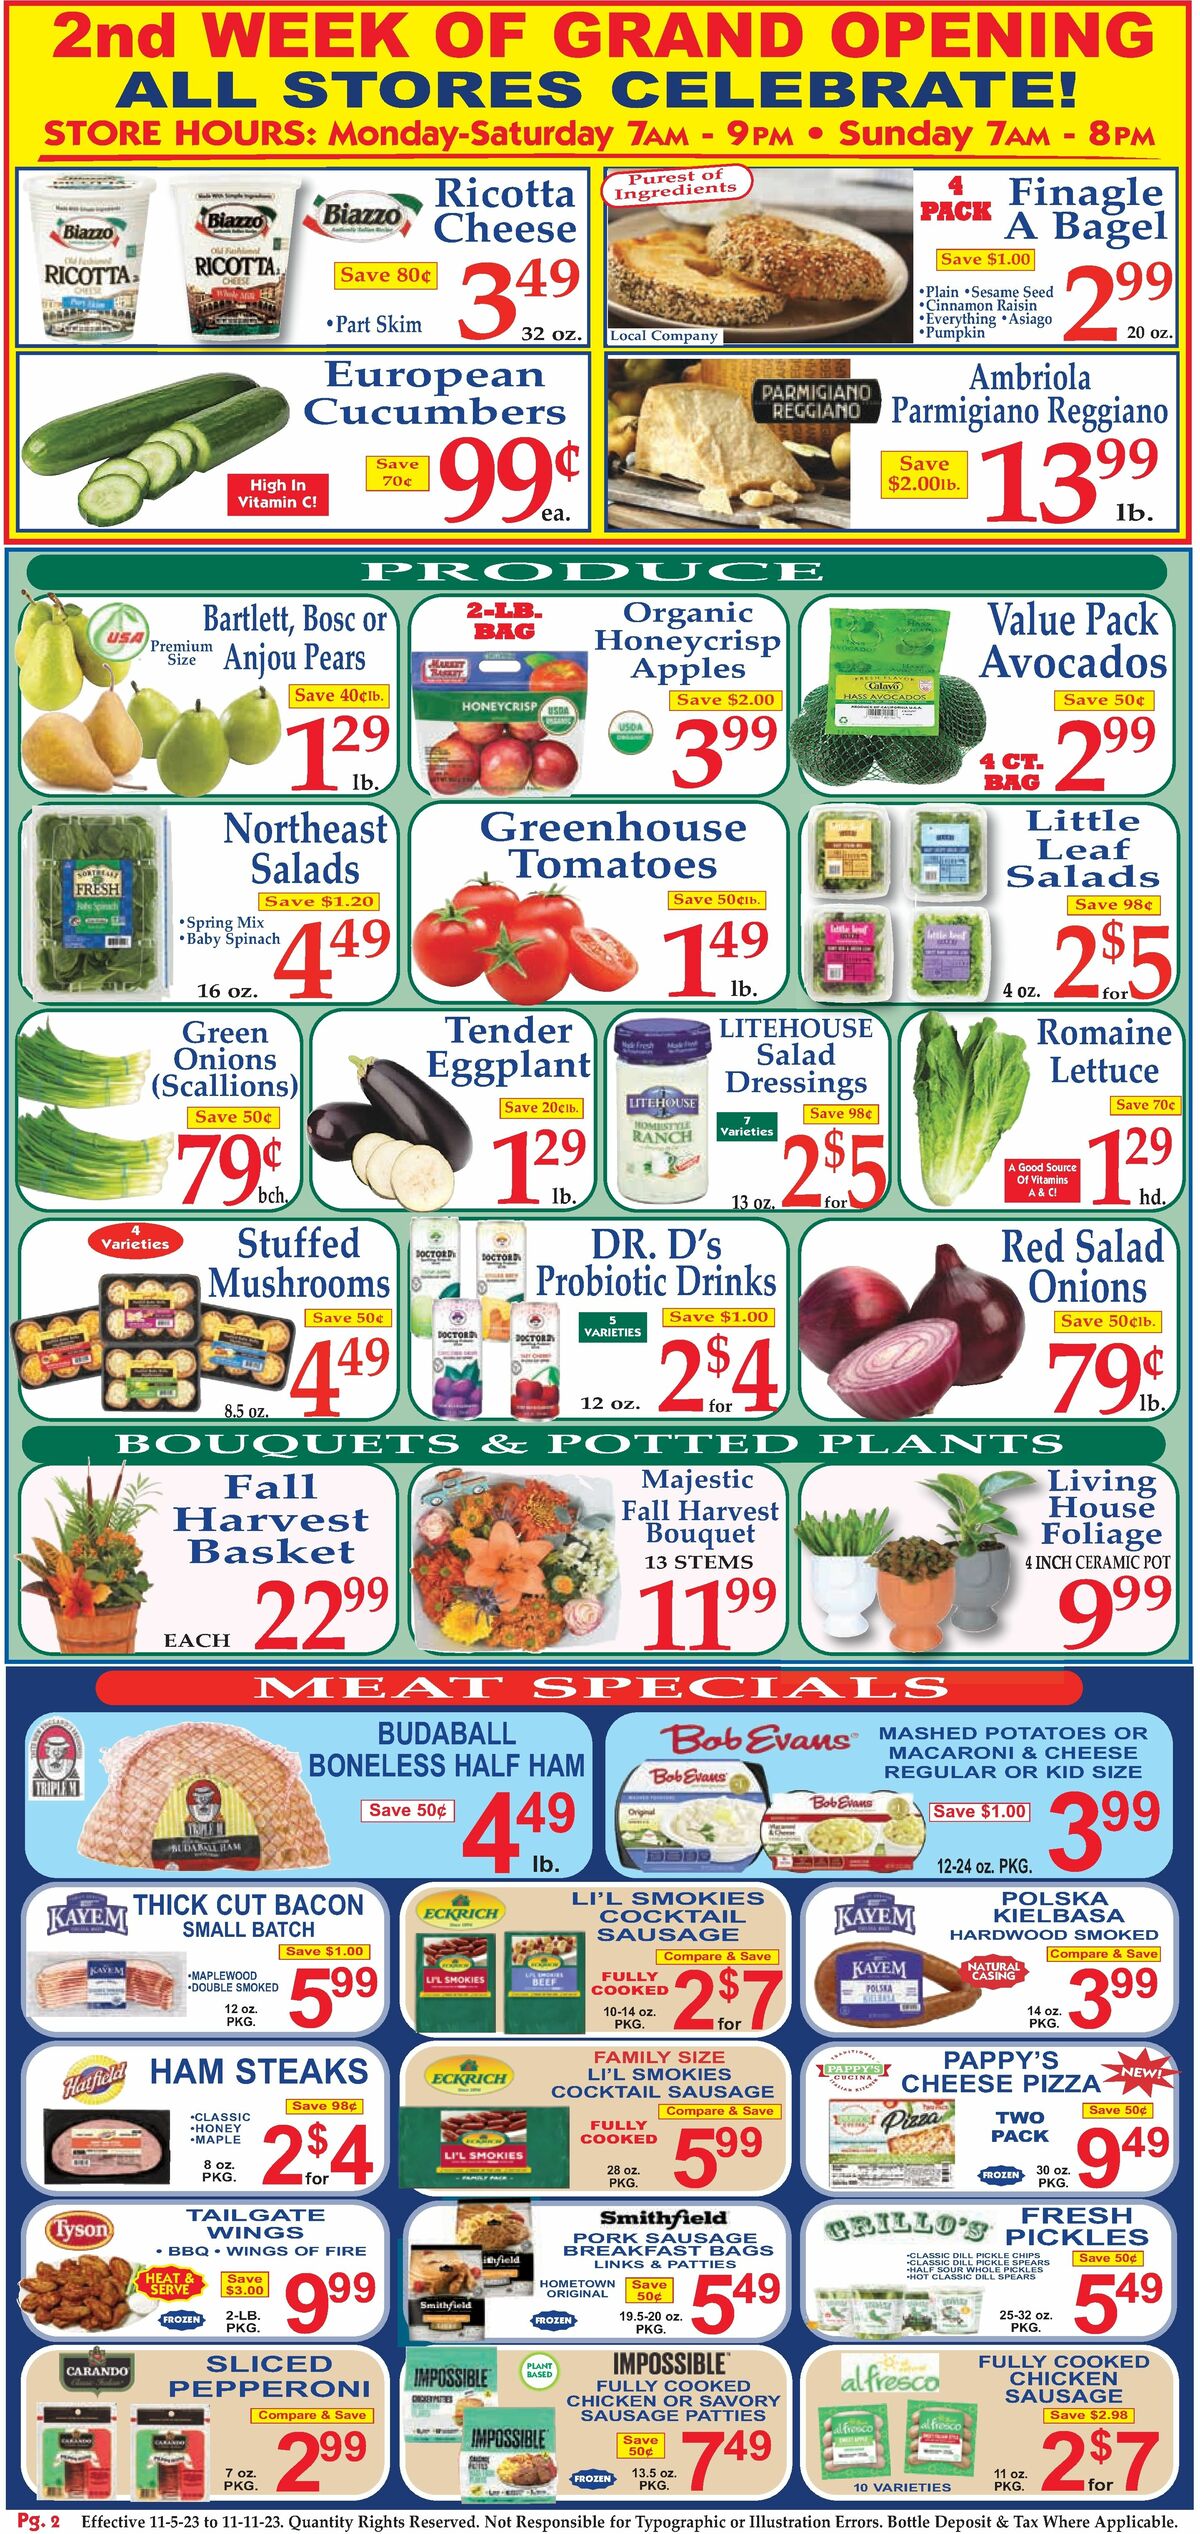 Market Basket Weekly Ad from November 5